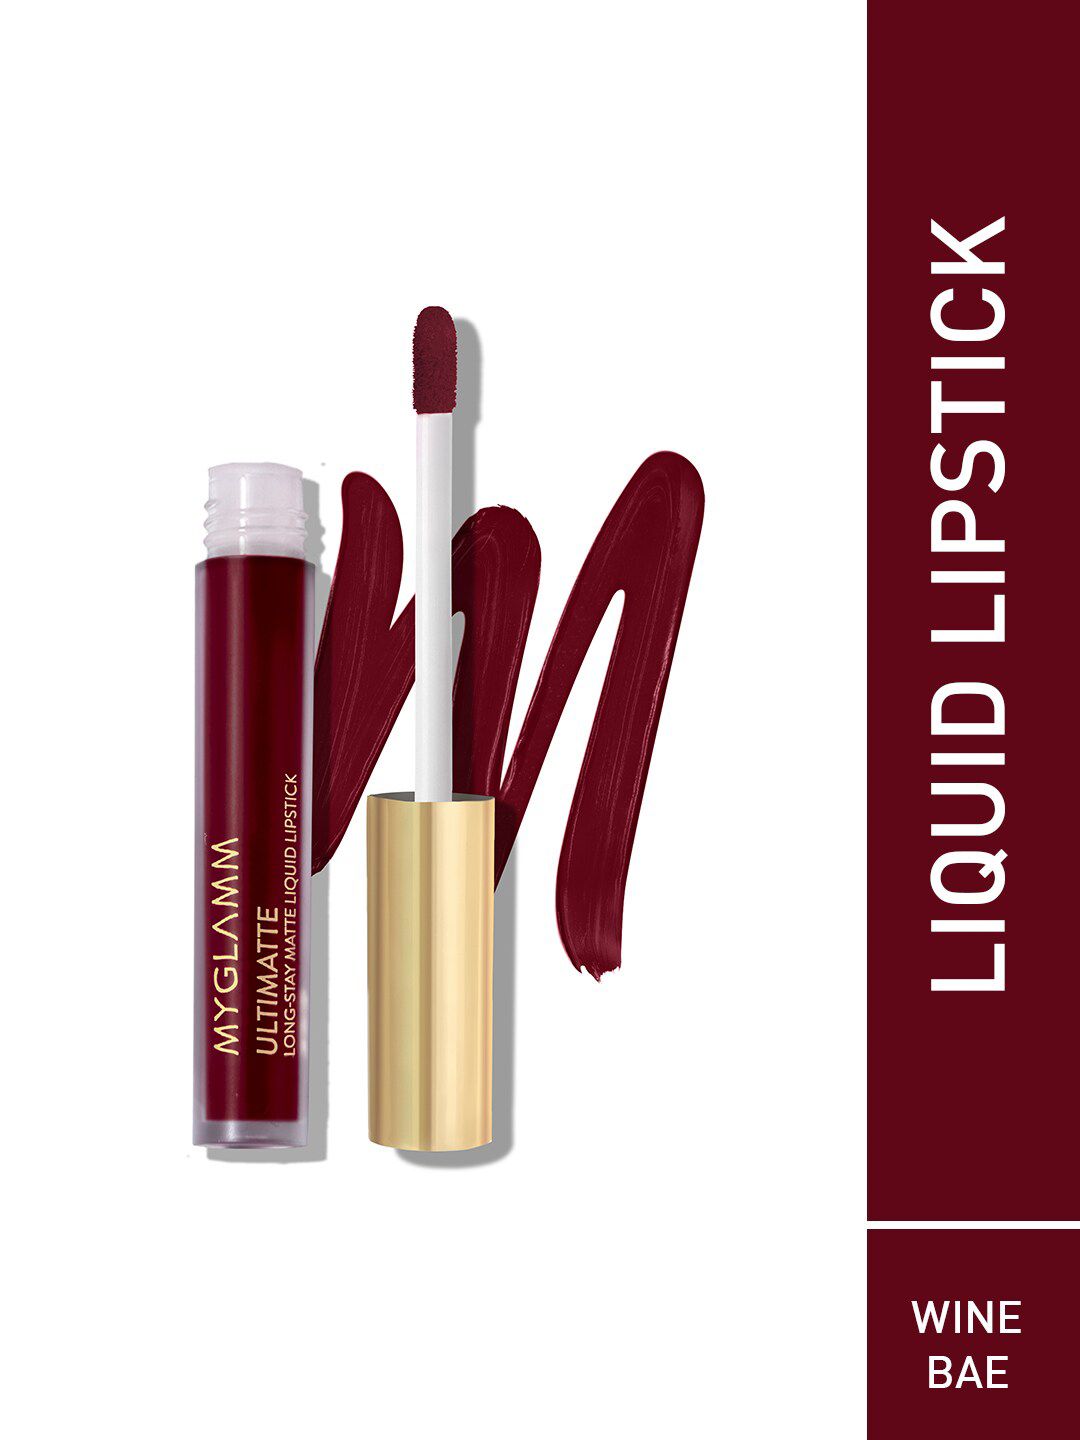 MyGlamm Ultimatte Long-Stay Matte Liquid Lipstick 2.5ml - Wine Babe Price in India